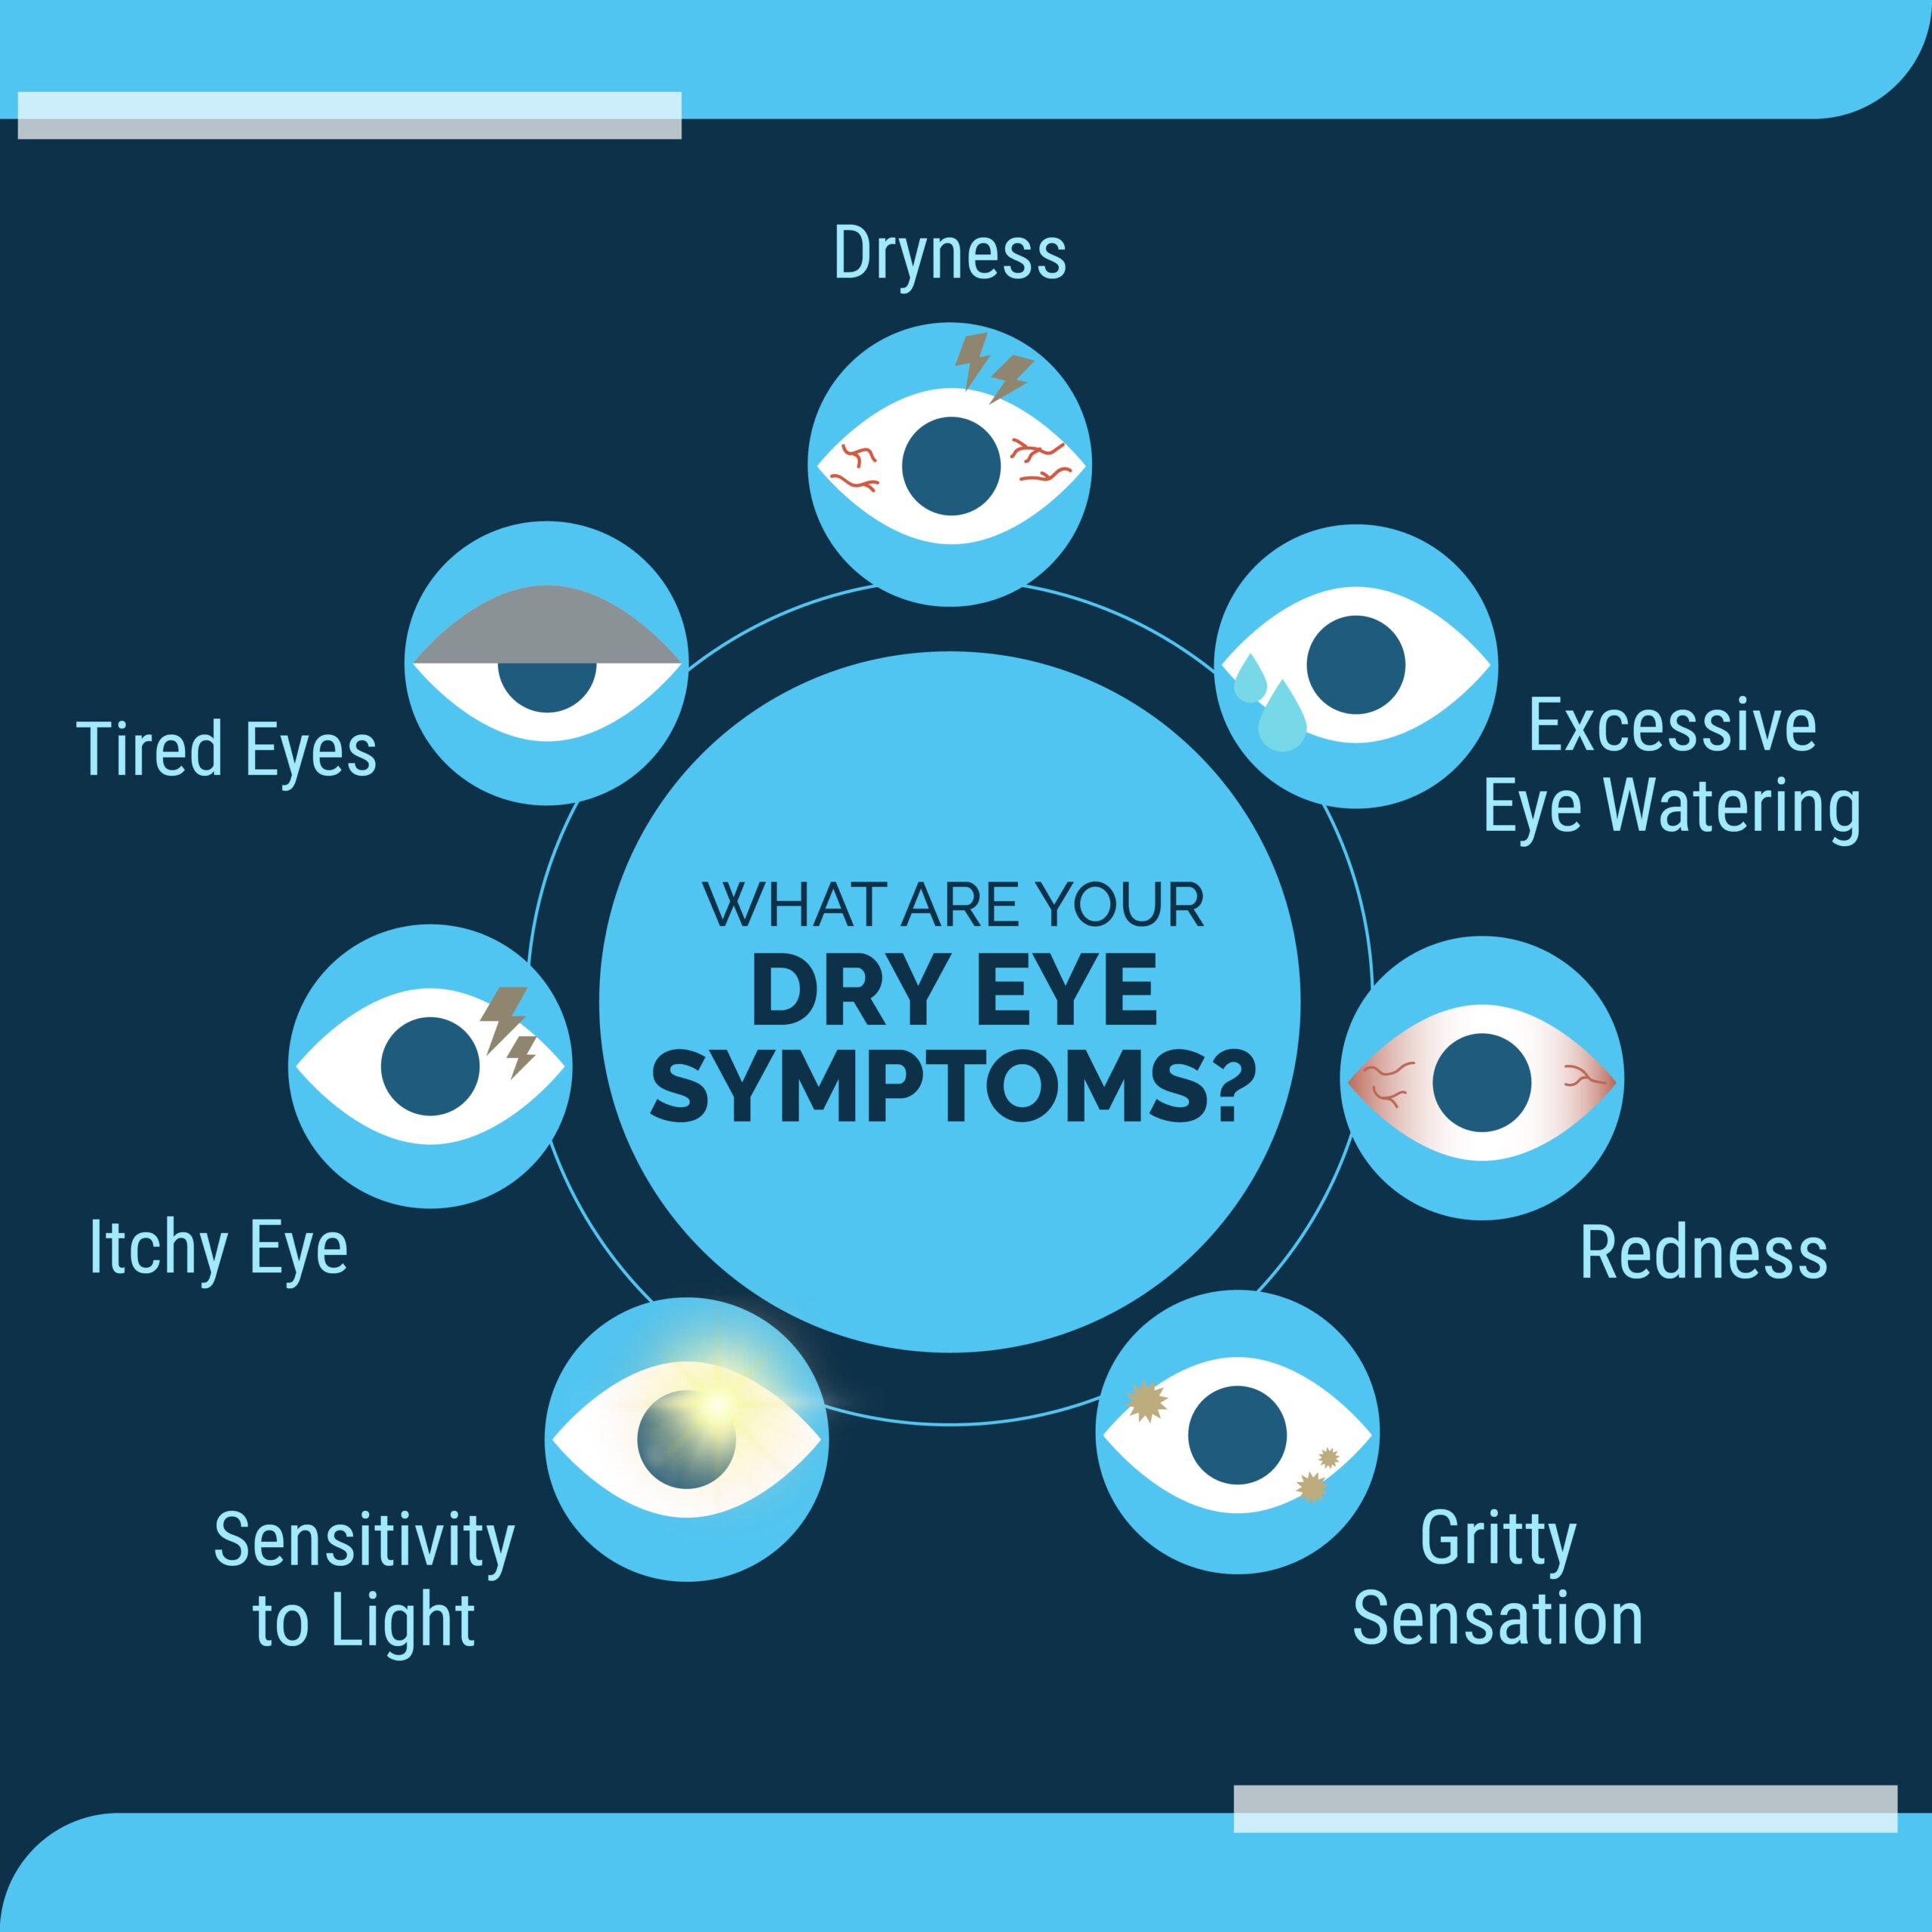 Symptoms of dry eye: dryness, excessive eye watering, redness, gritty sensation, sensitivity to light, itchy eye, tired eyes.